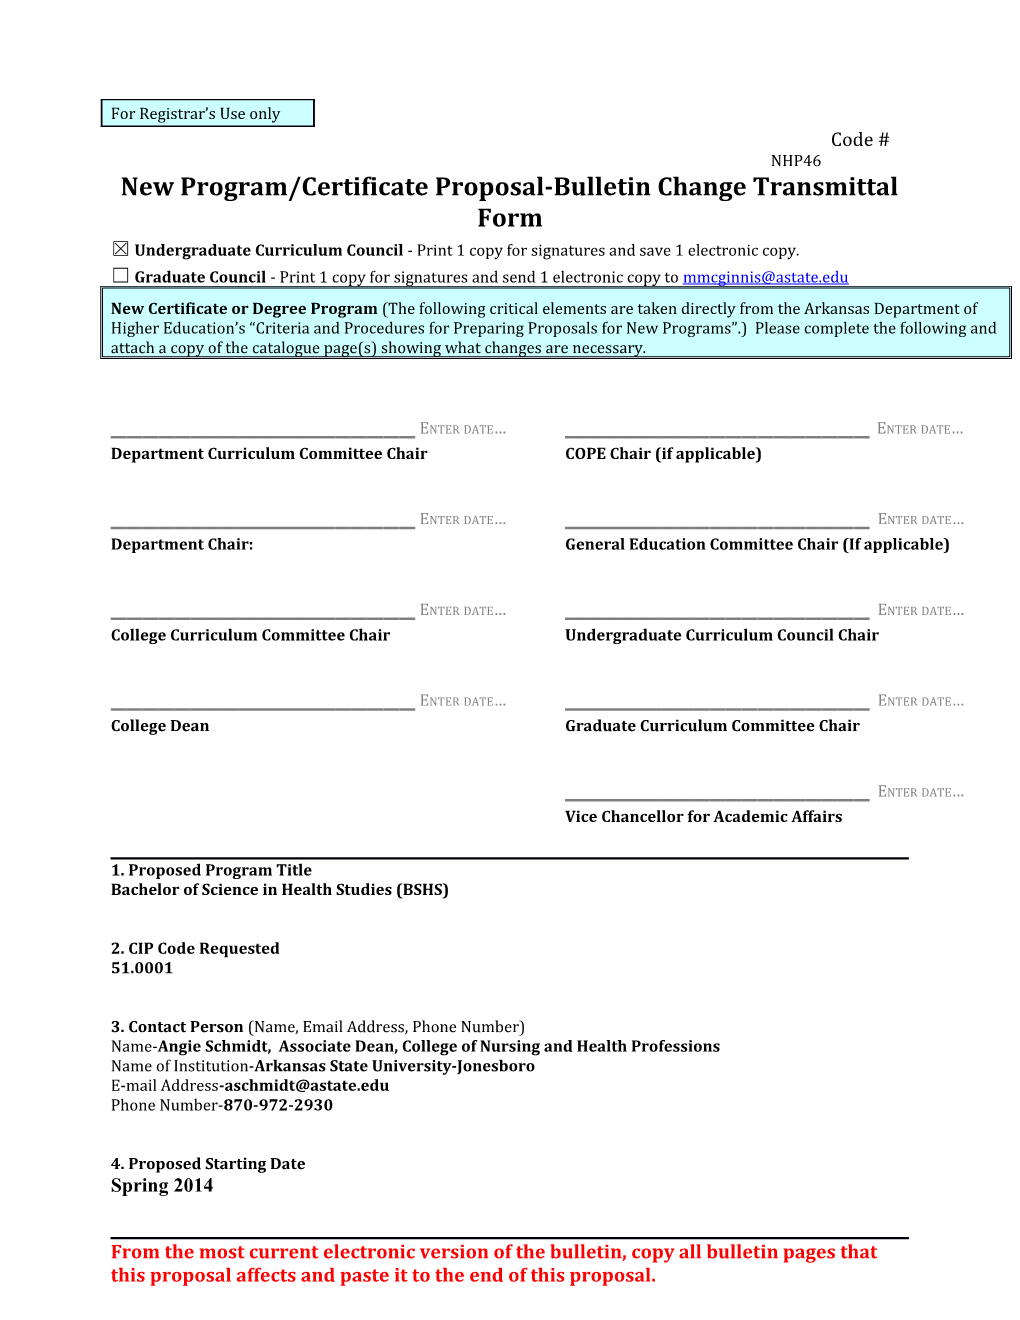 New Program/Certificate Proposal-Bulletin Change Transmittal Form